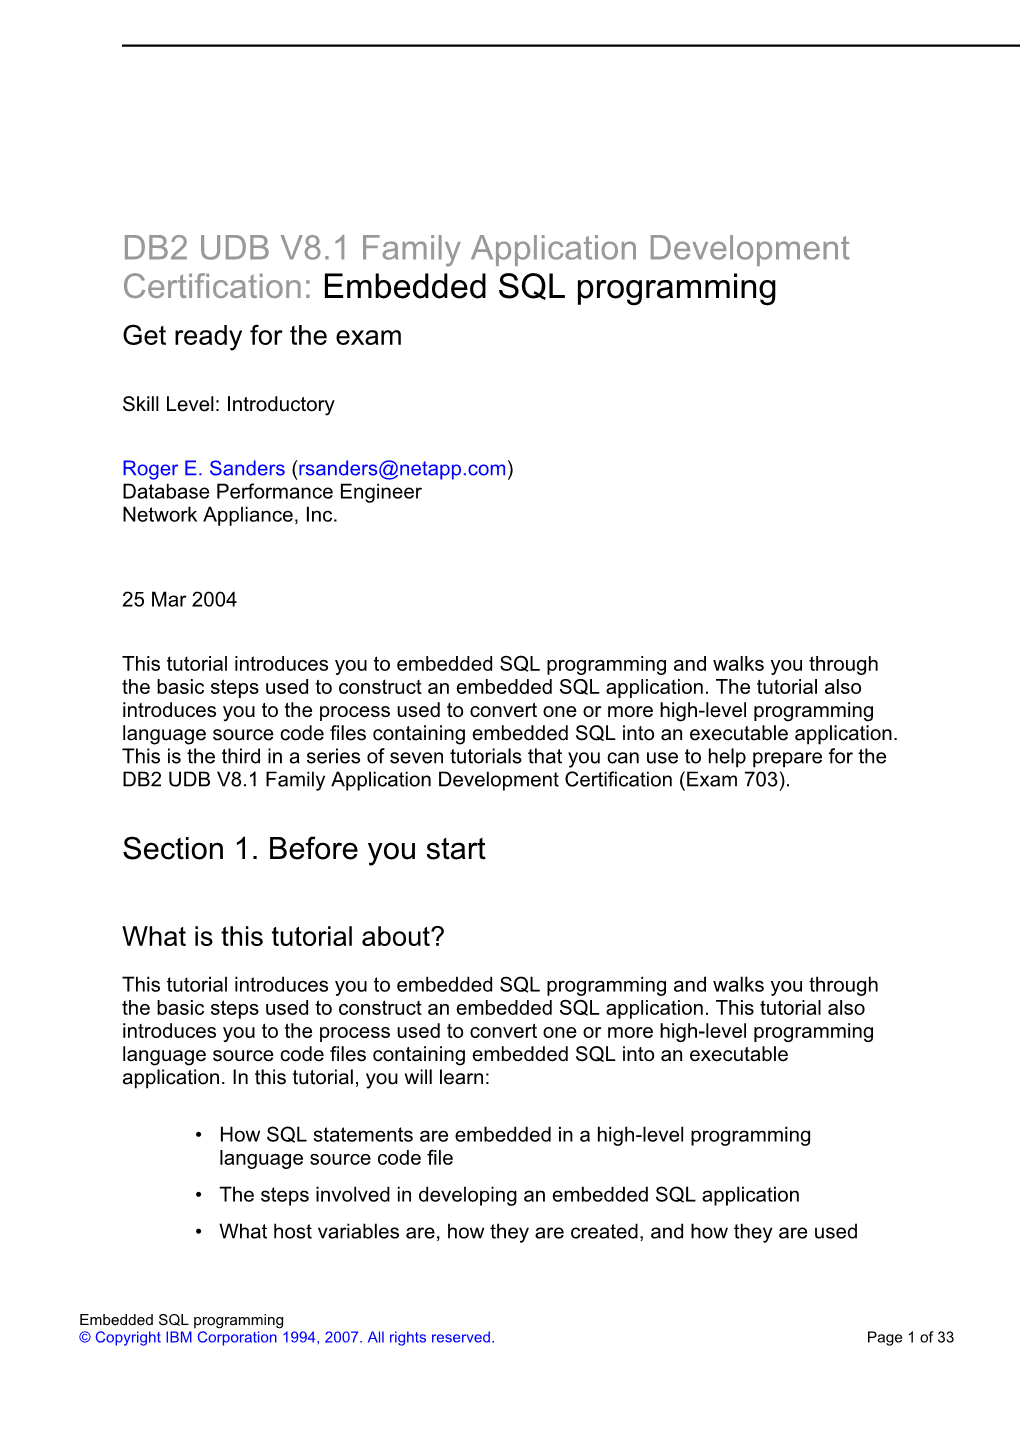 DB2 UDB V8.1 Family Application Development Certification: Embedded SQL Programming Get Ready for the Exam